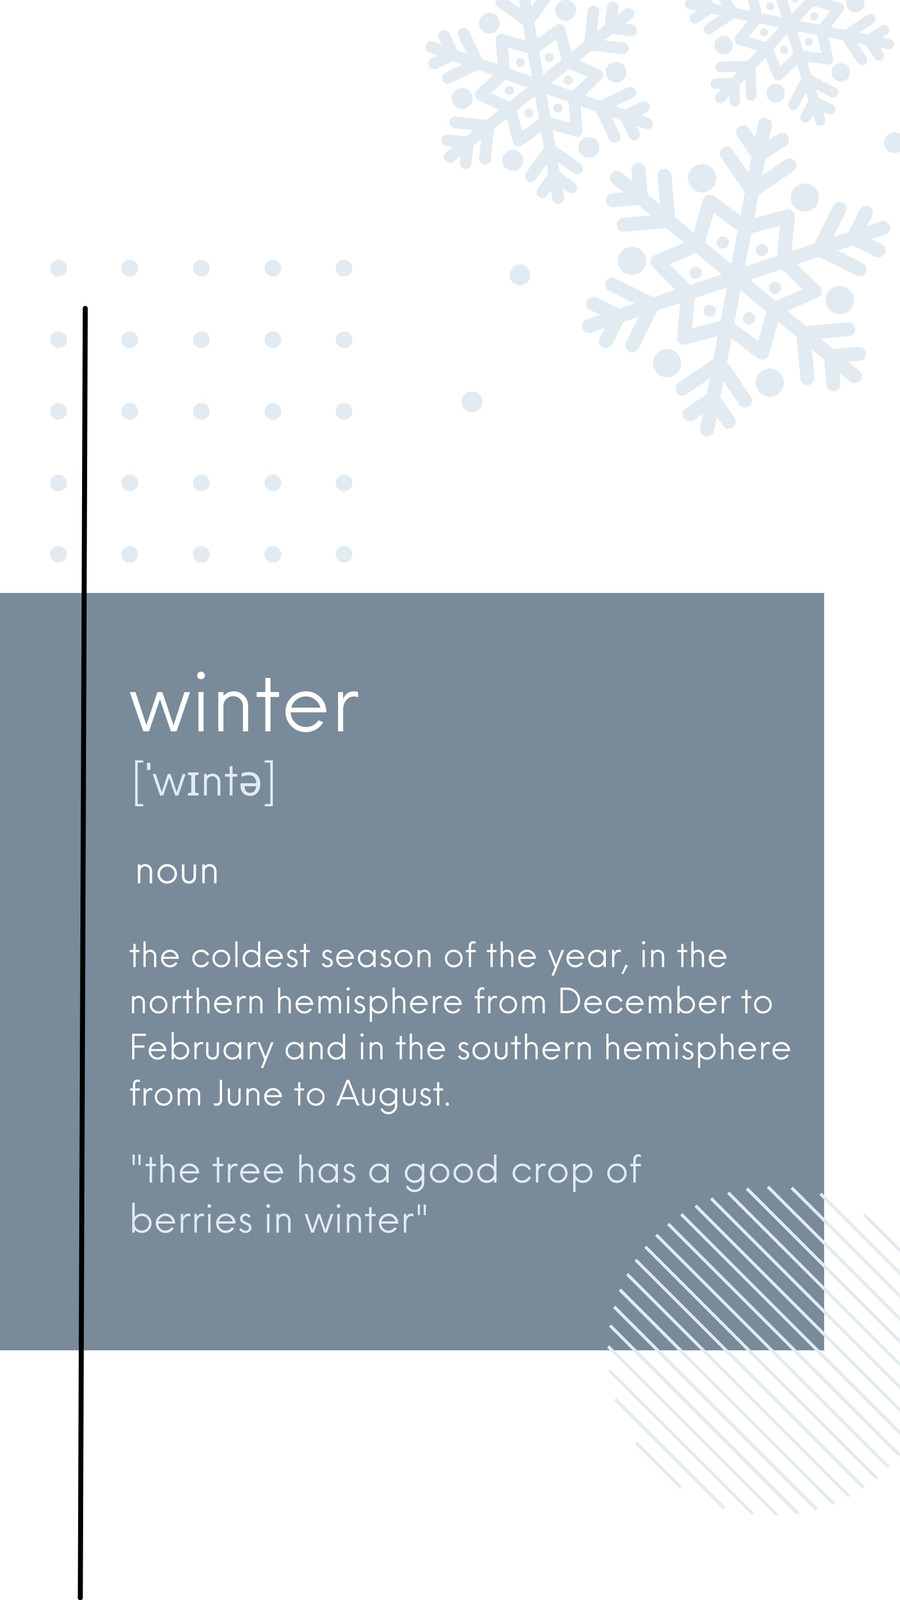 Winter: The coldest season